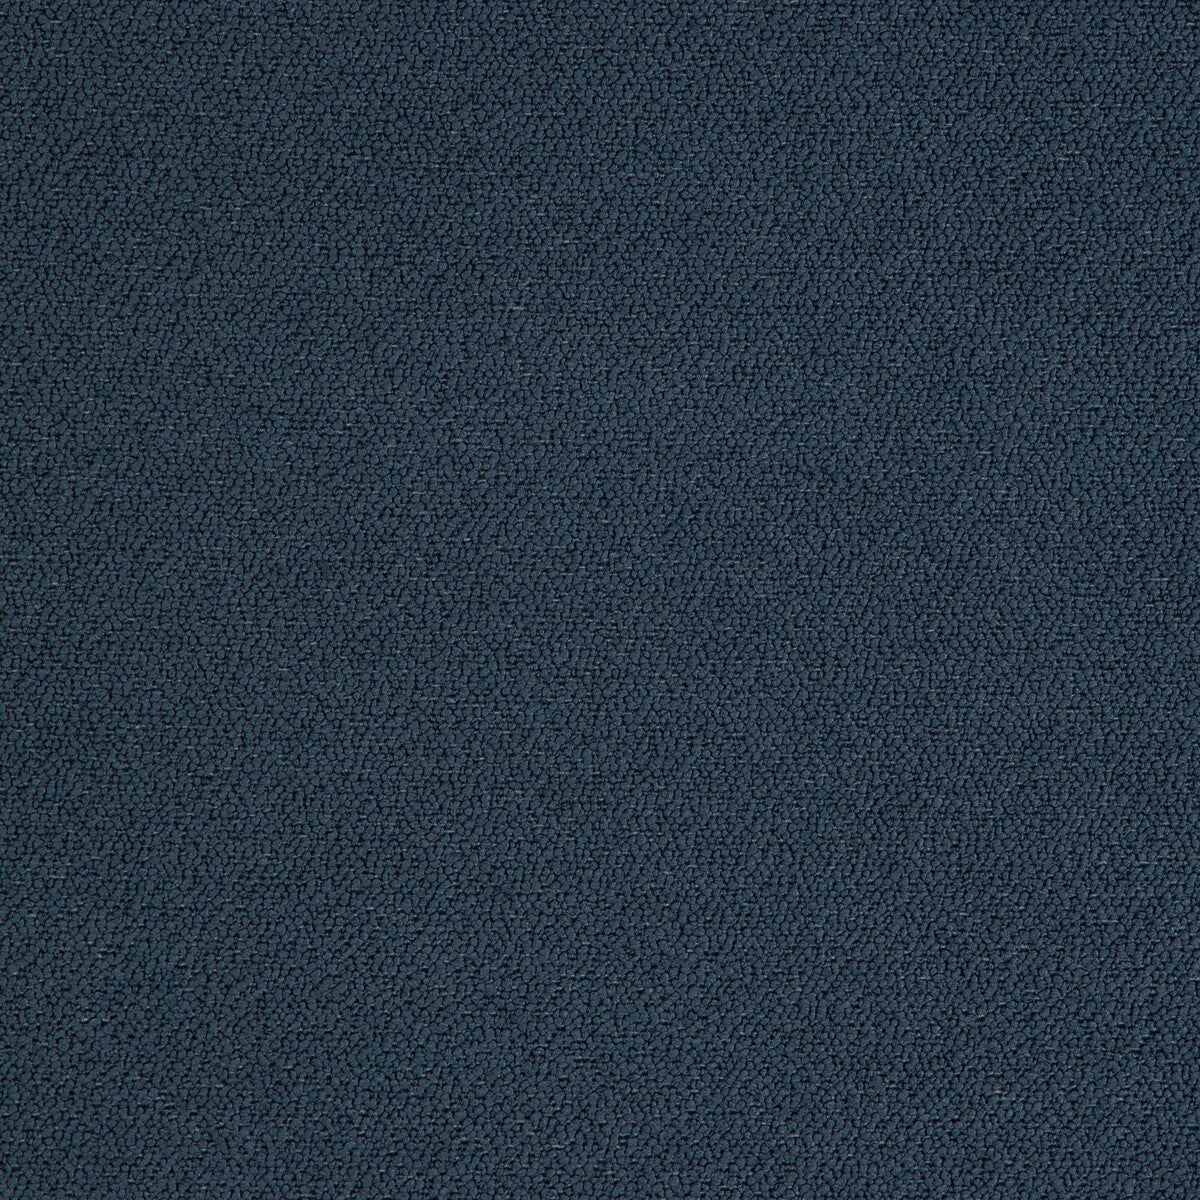 Kravet Smart fabric in 36980-50 color - pattern 36980.50.0 - by Kravet Smart